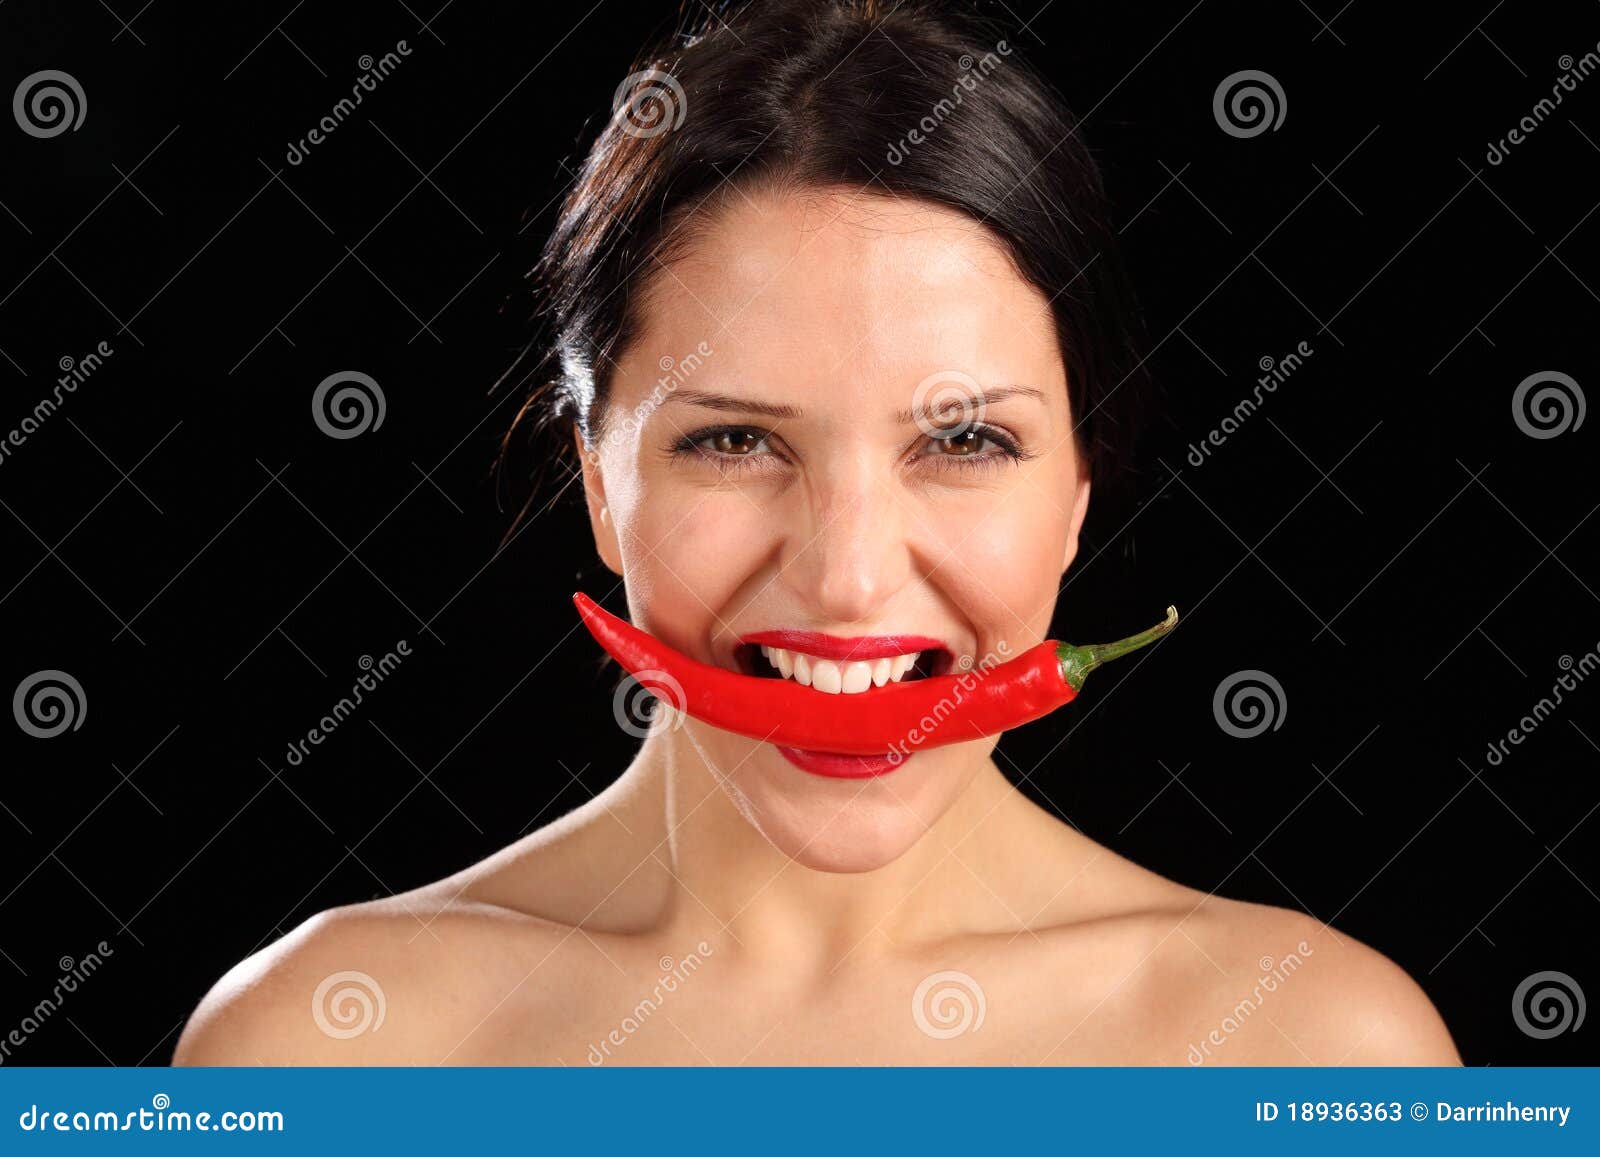 Beautiful Woman Biting On Red Chili Pepper Stock Image